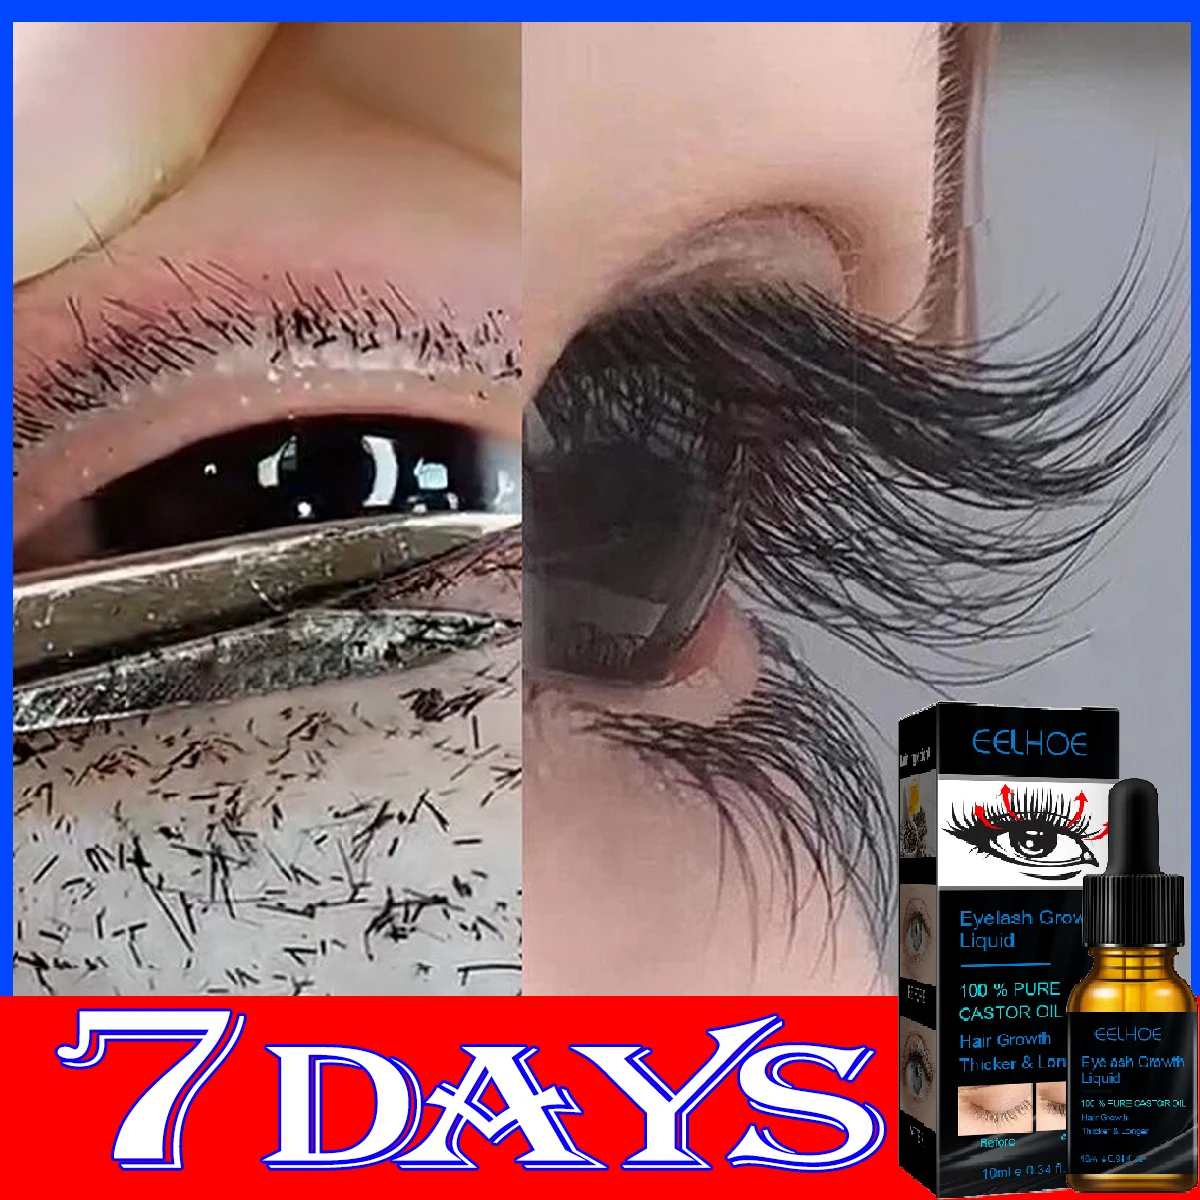 

7 Days Eyelash Kit Growth Serum Essence Fast Growing Eyelash Eyebrow Longer Thicker Dense Enhancement Eyelash Care Product